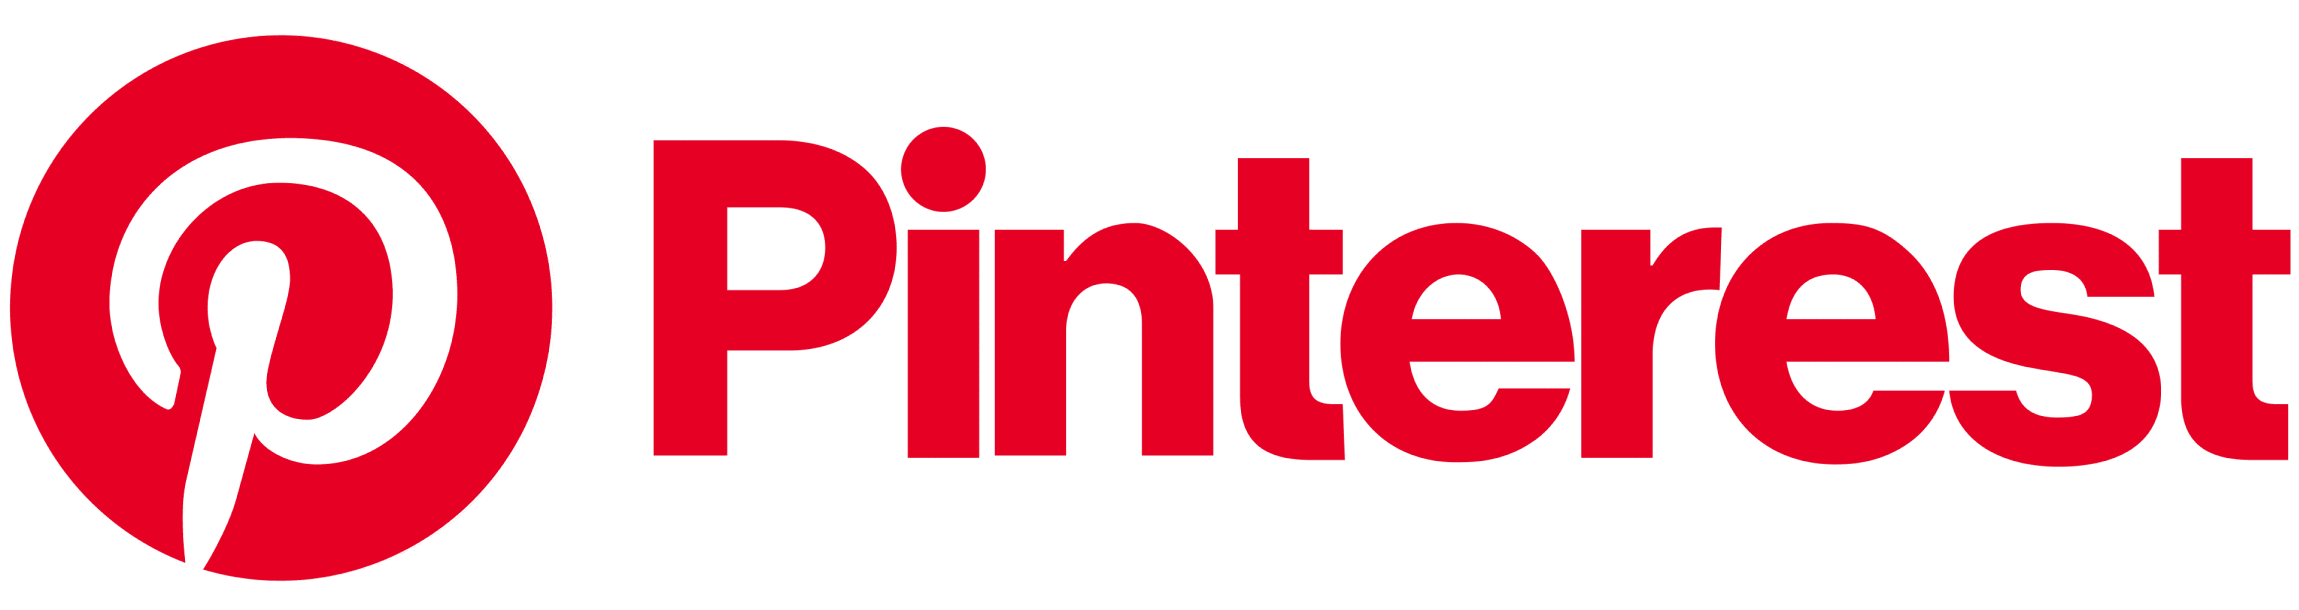 Pinterest-Logo 1